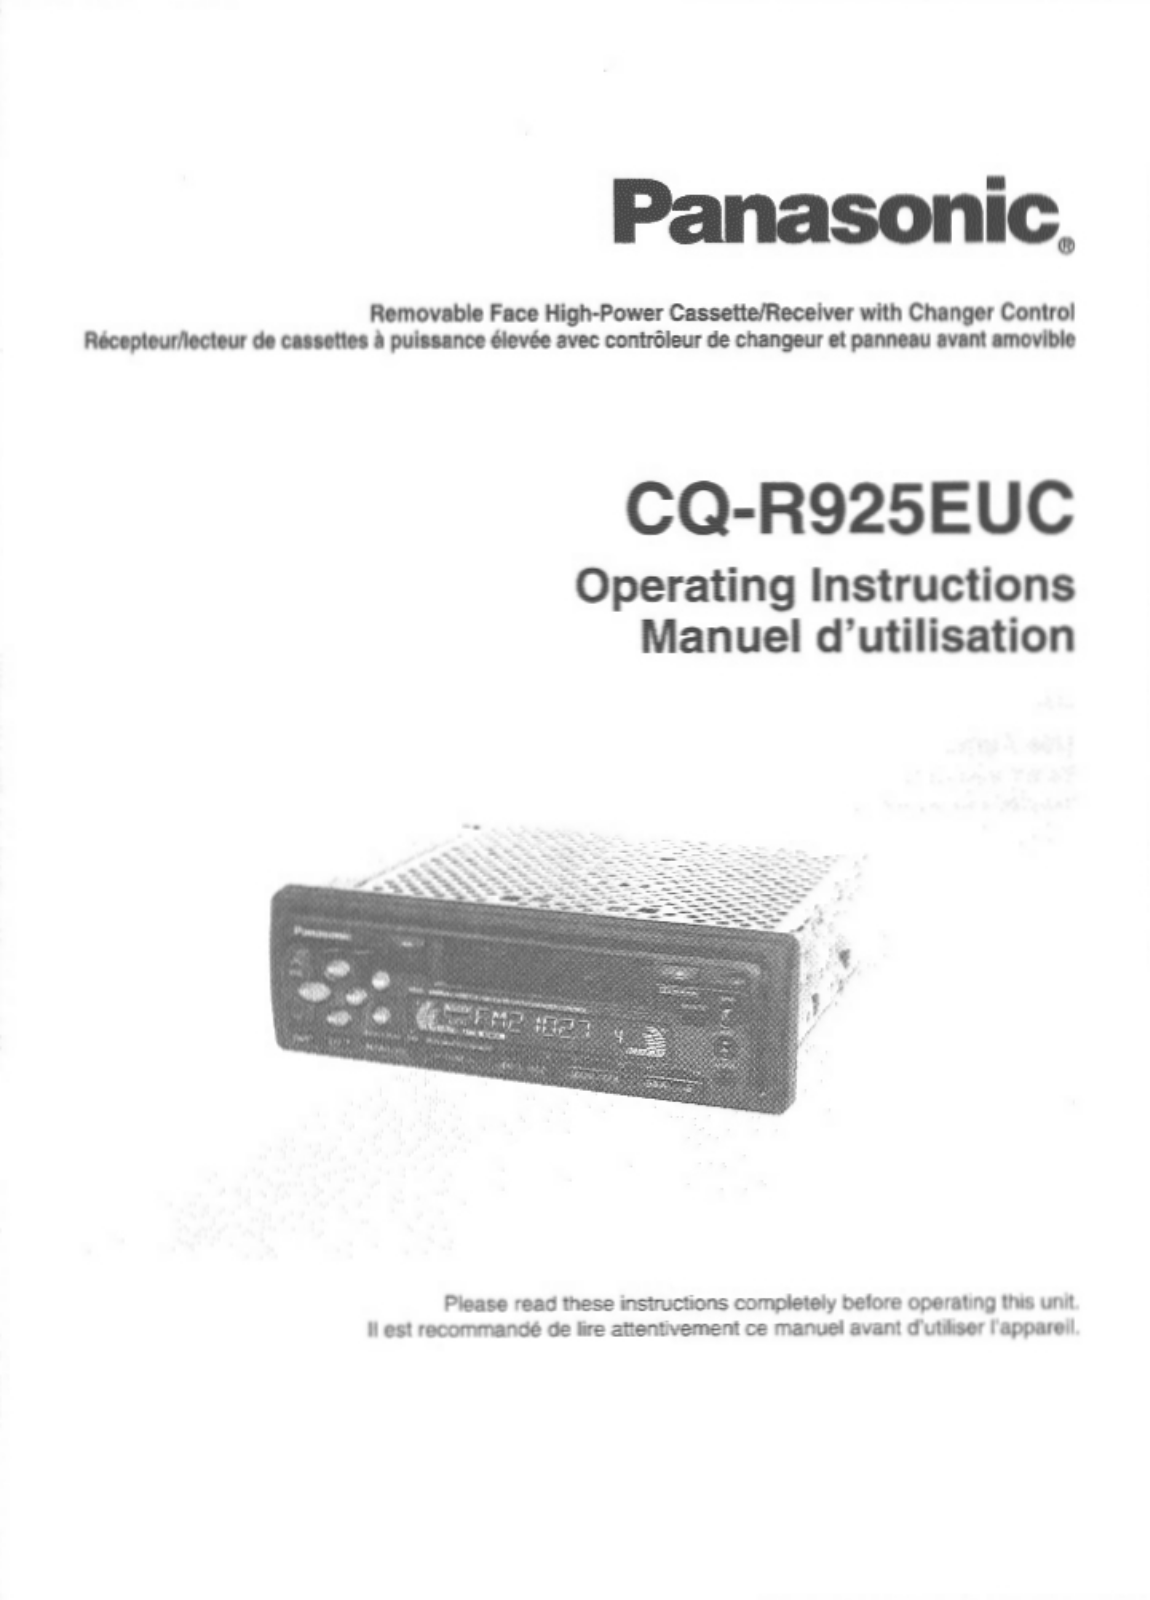 Panasonic cq-r925euc Operation Manual